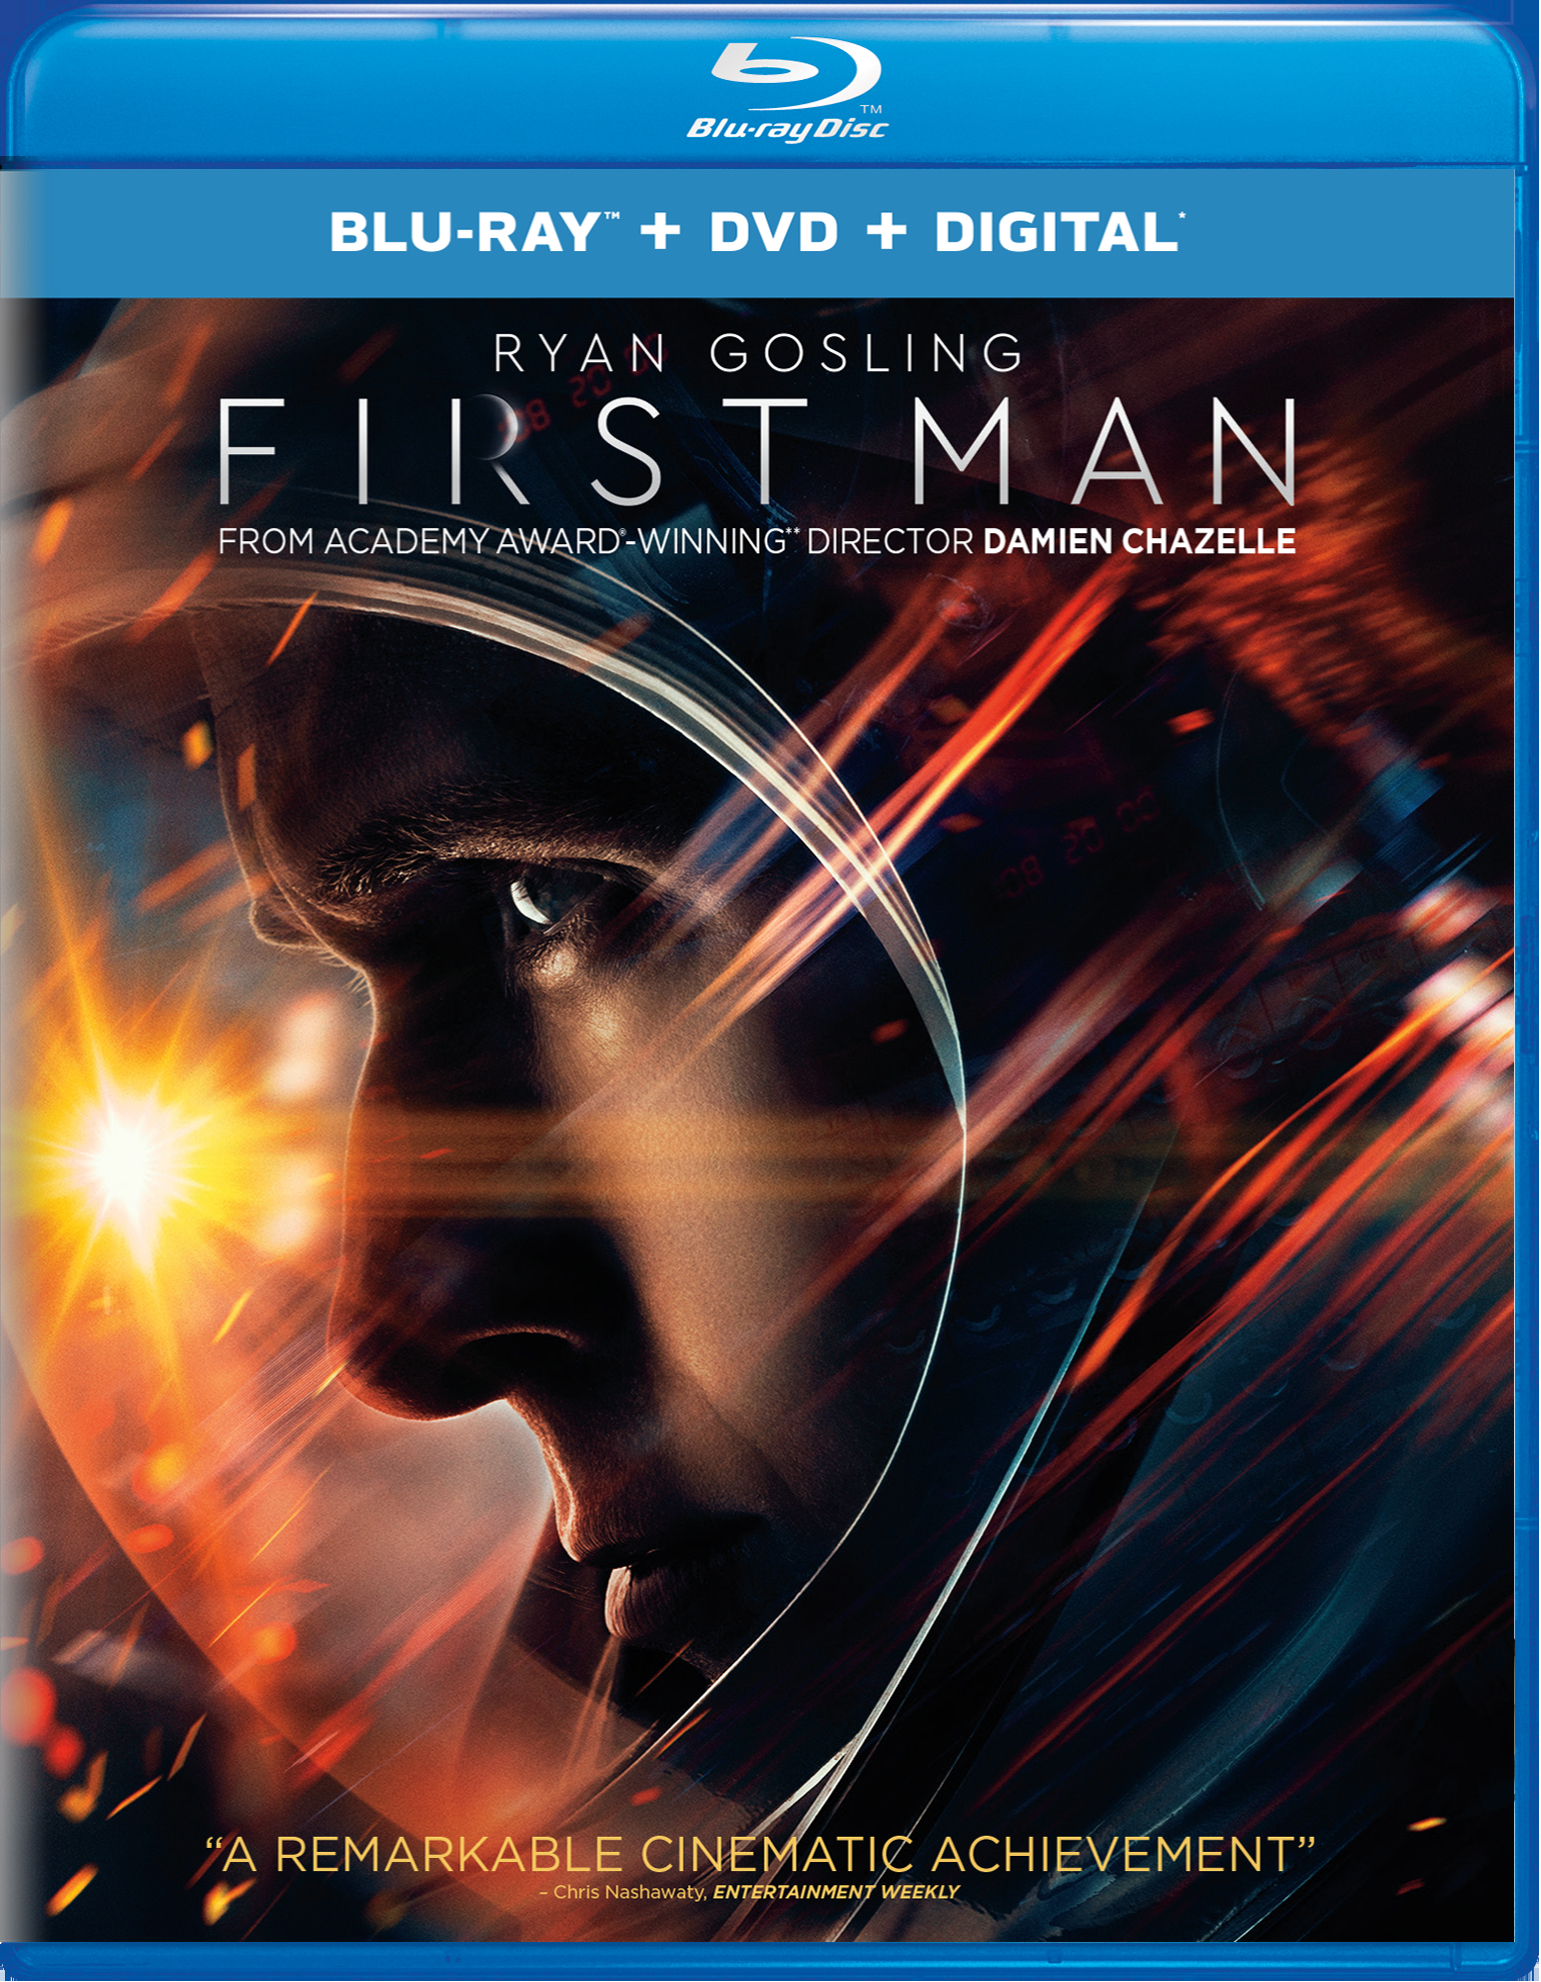 First Man (DVD + Digital) - Blu-ray [ 2018 ]  - Drama Movies On Blu-ray - Movies On GRUV